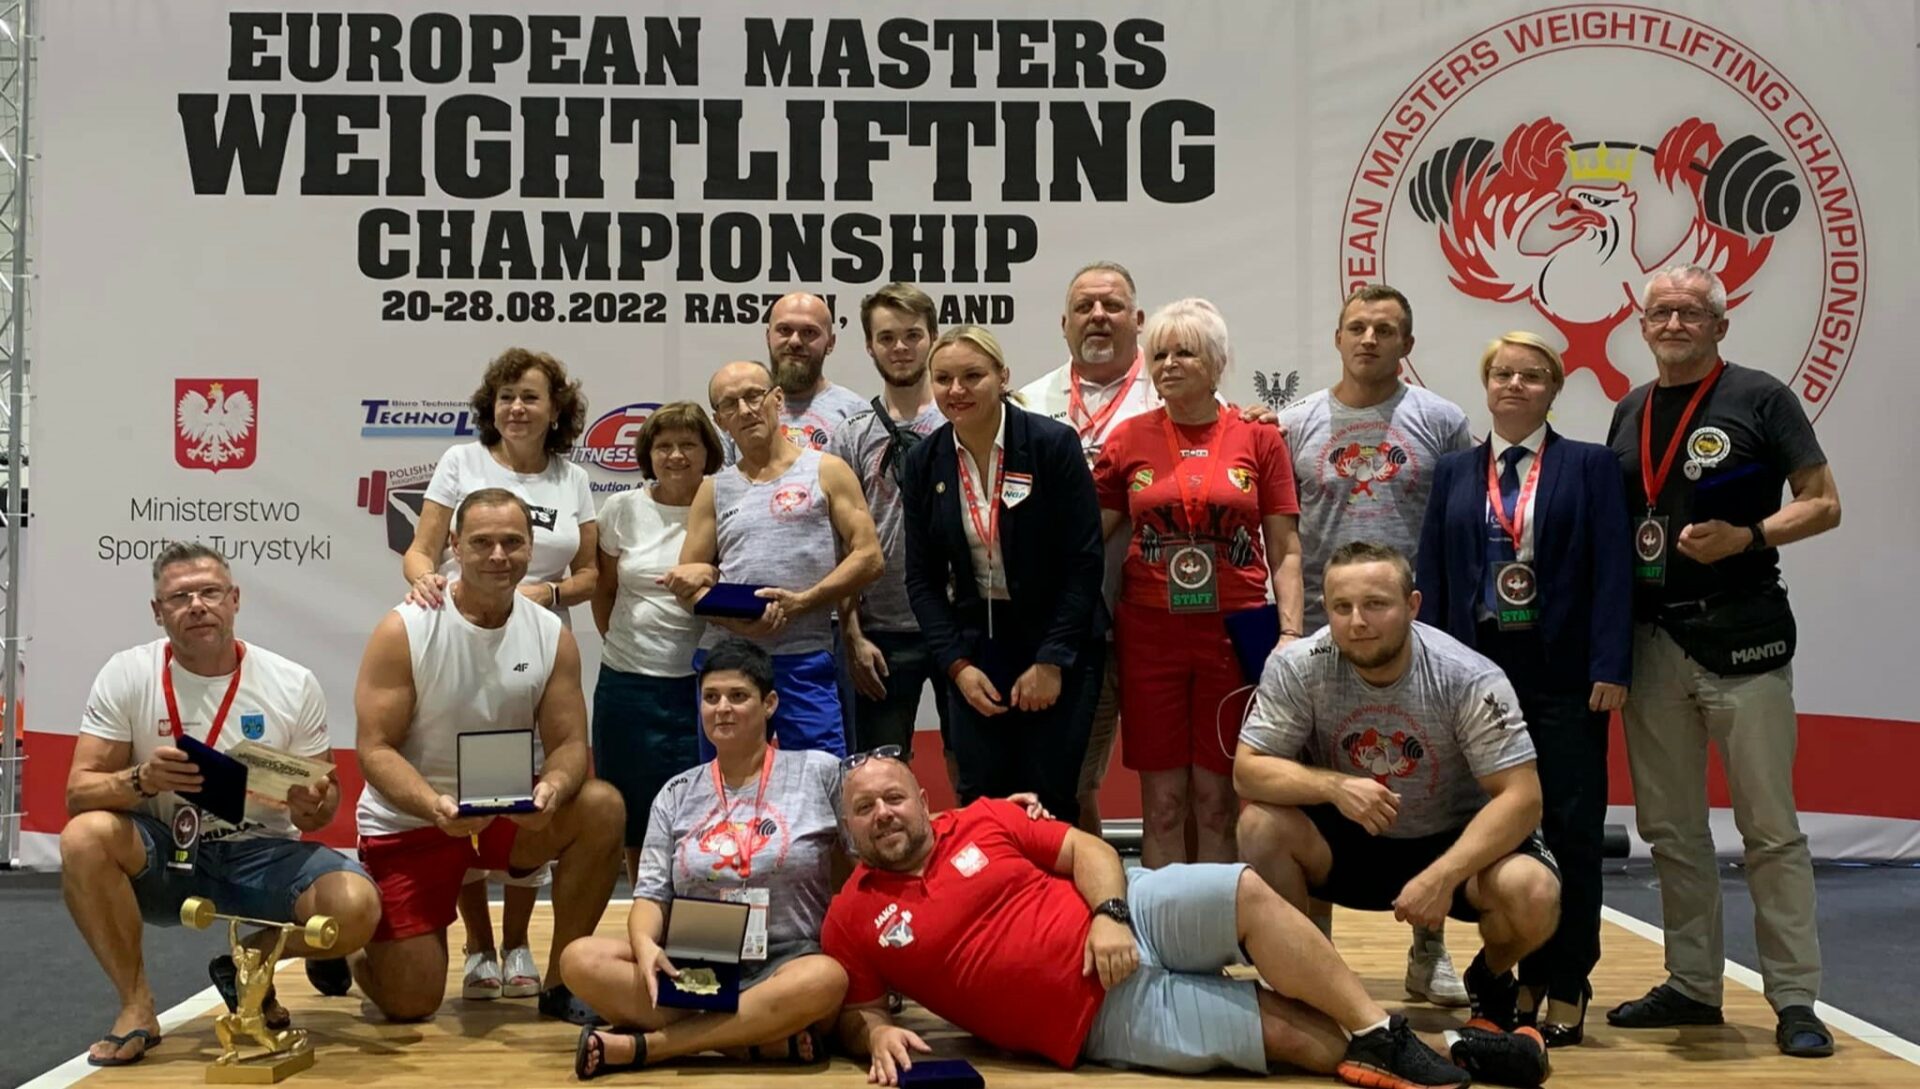 European Masters Weightlifting 2022 in Raszyn, Masovian Voivodeship